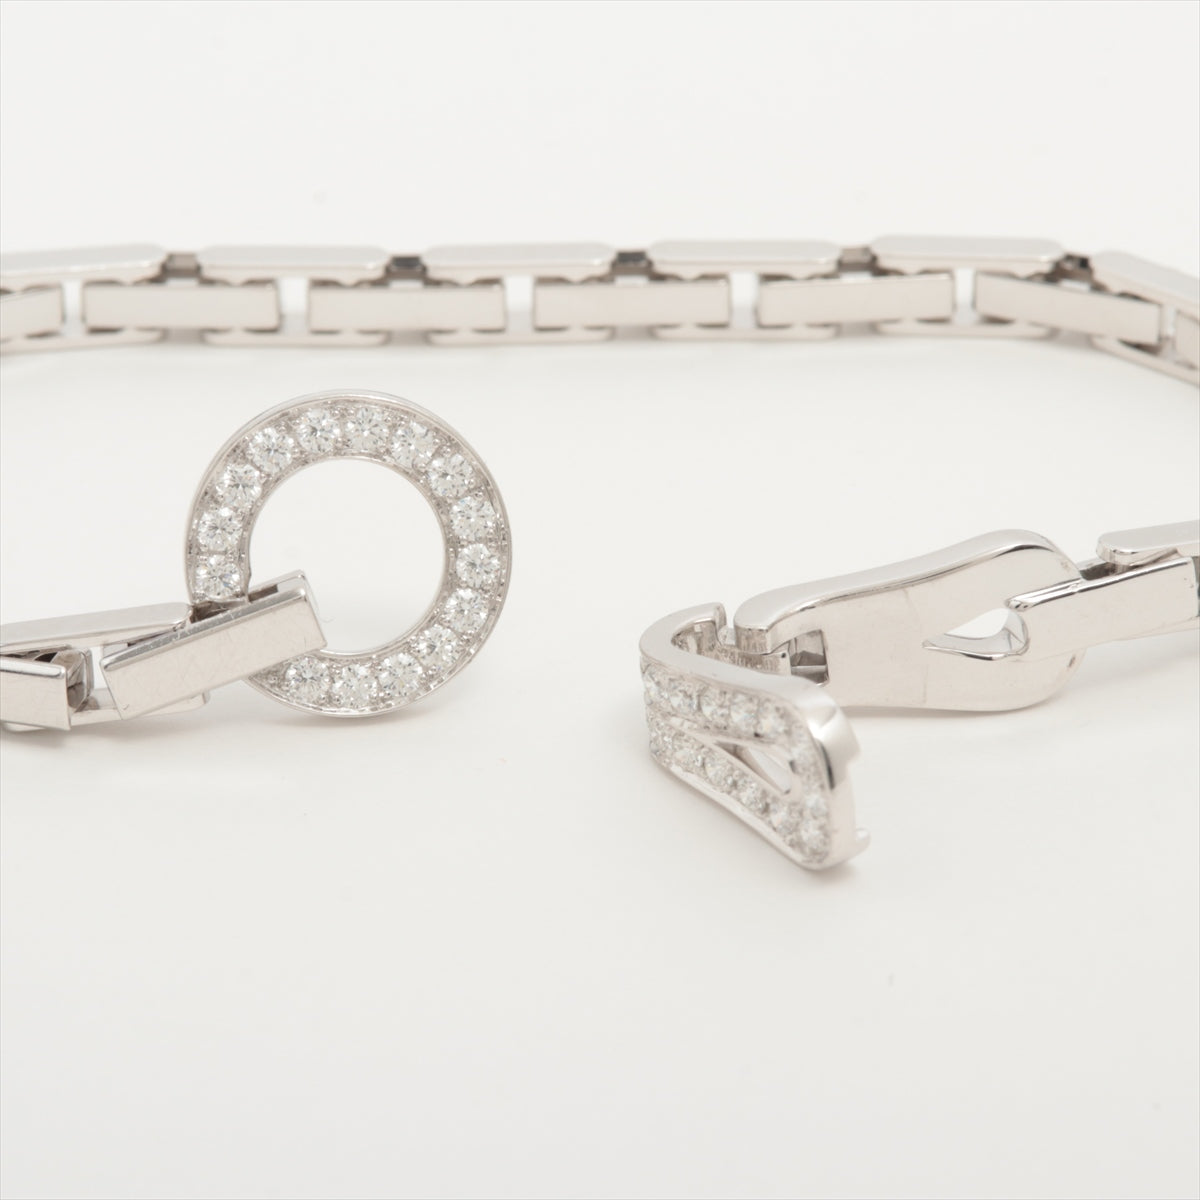 Cartier Agraffe diamond Bracelet 750WG 31.1g